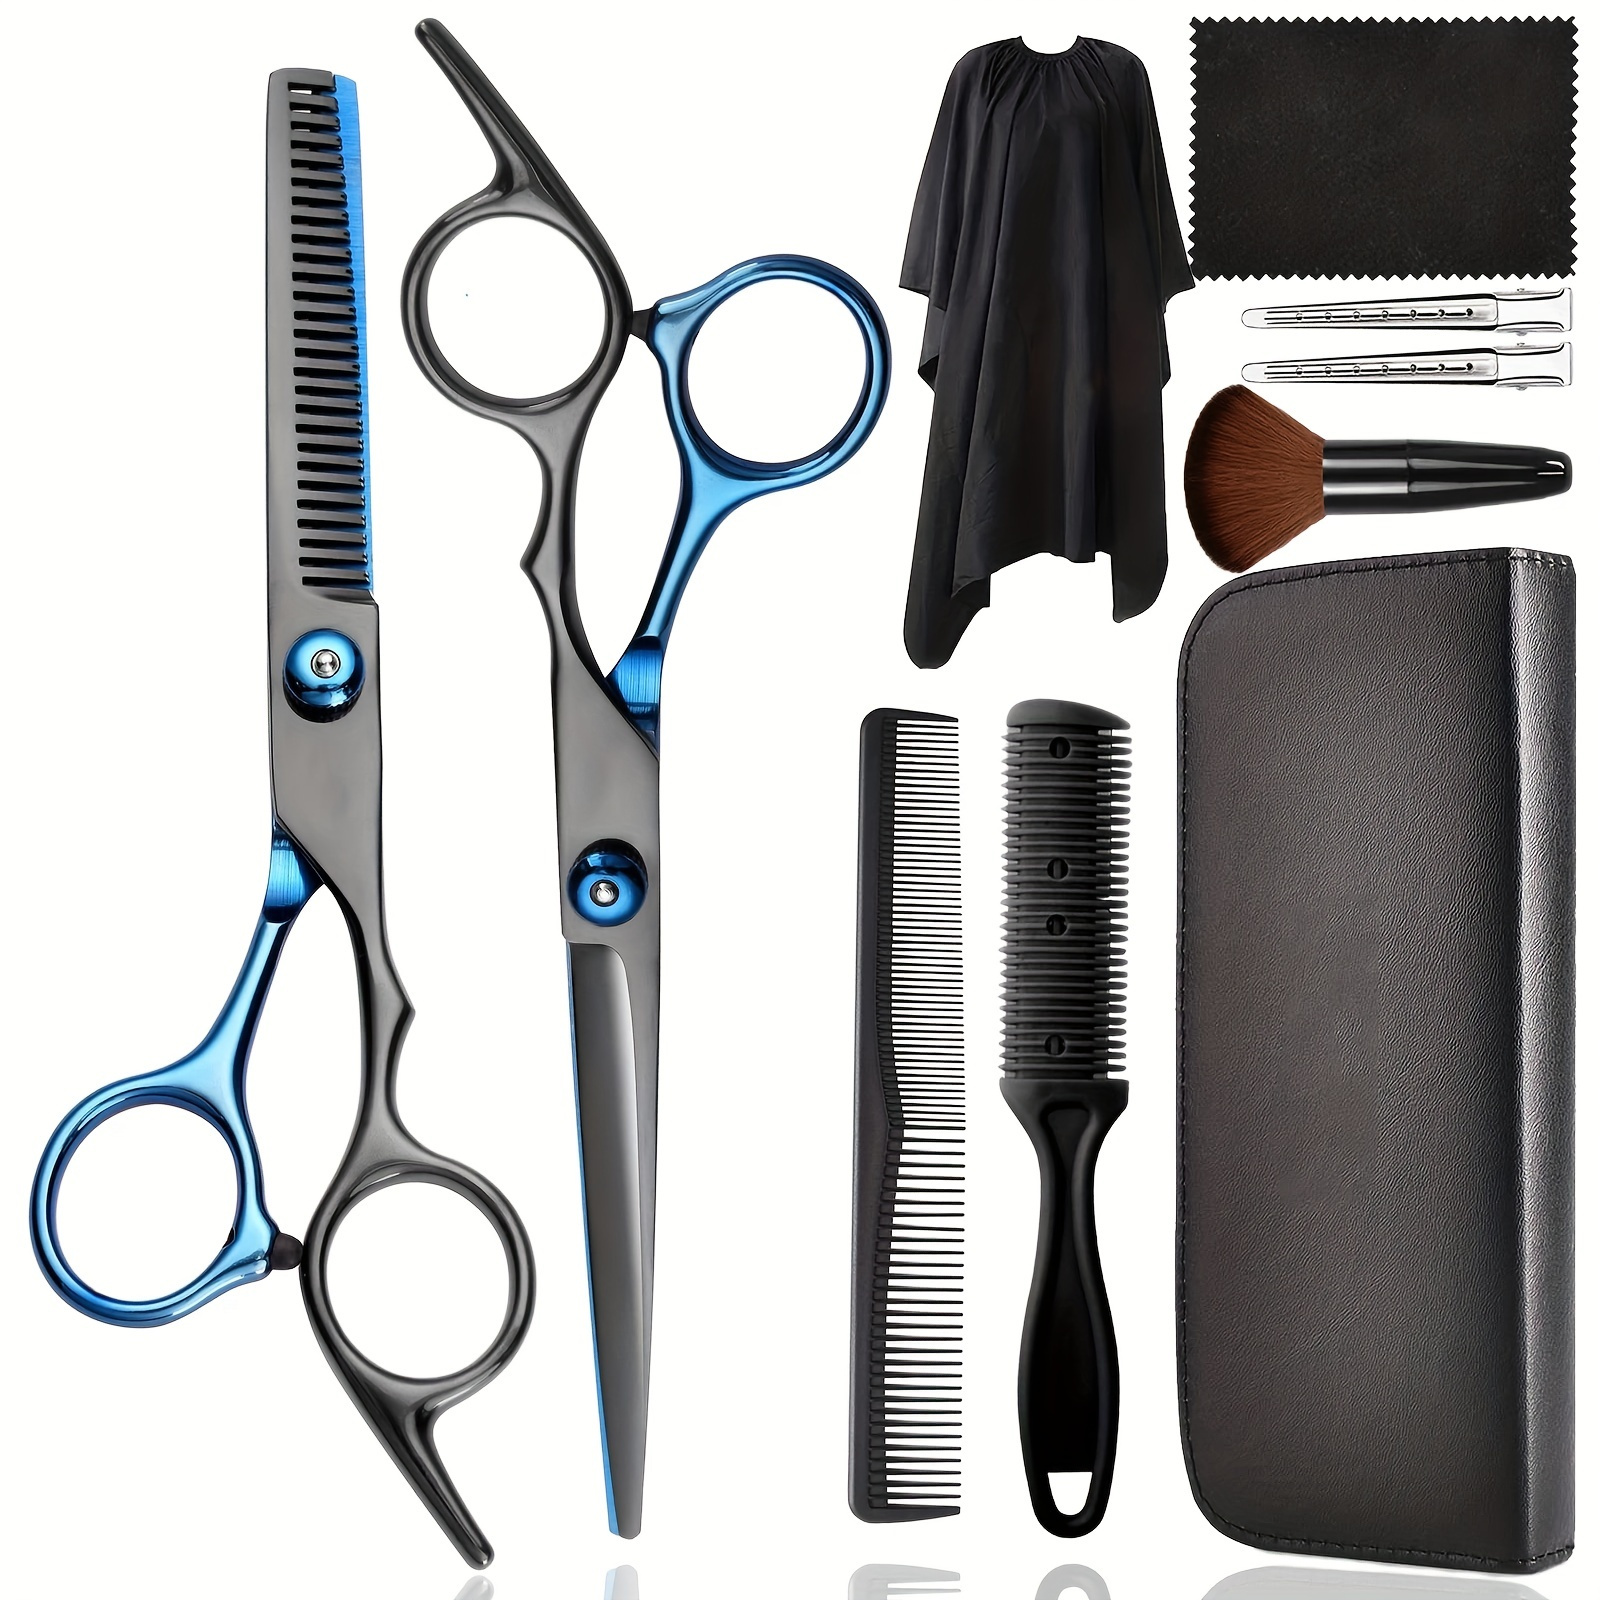 1pcs Professional Hair Cutting Scissors Shears, Black Golden Haircut  Scissors, Hairdresser Scissors Tools